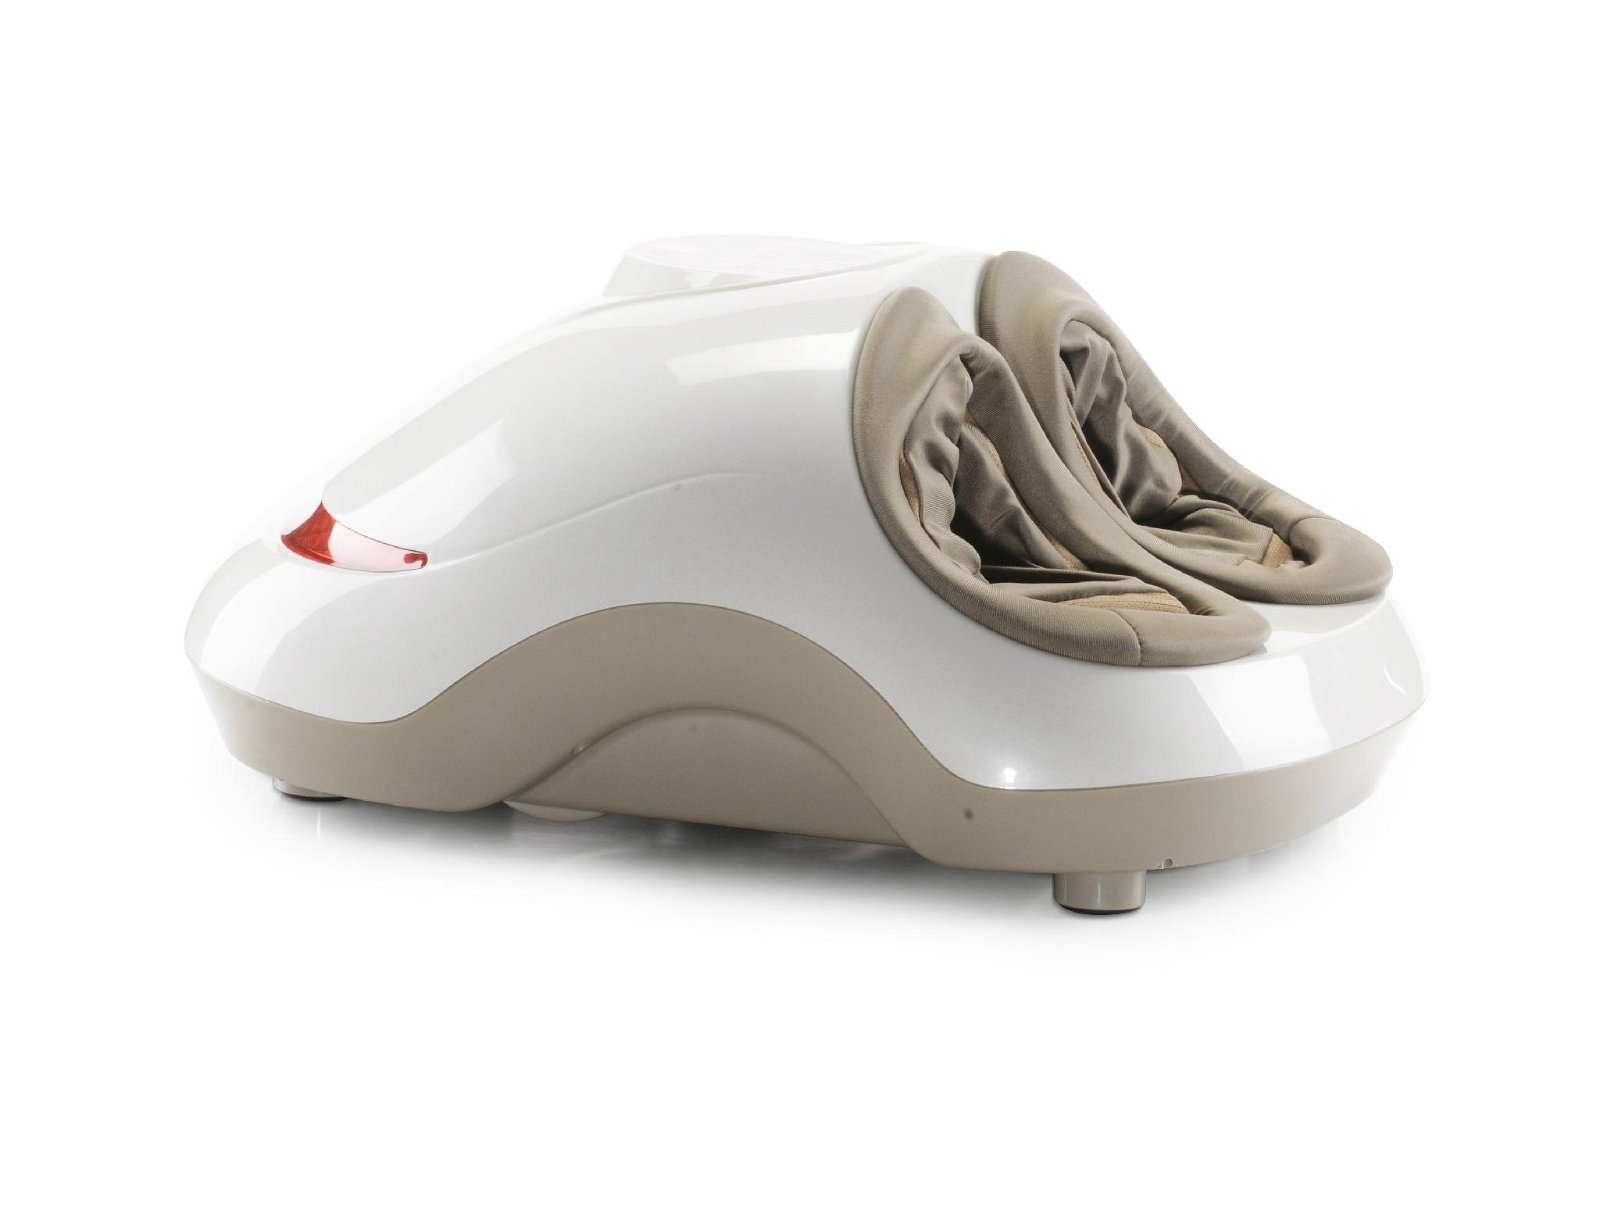 K818B shiatsu foot electrical massage apparatus with kneading 3